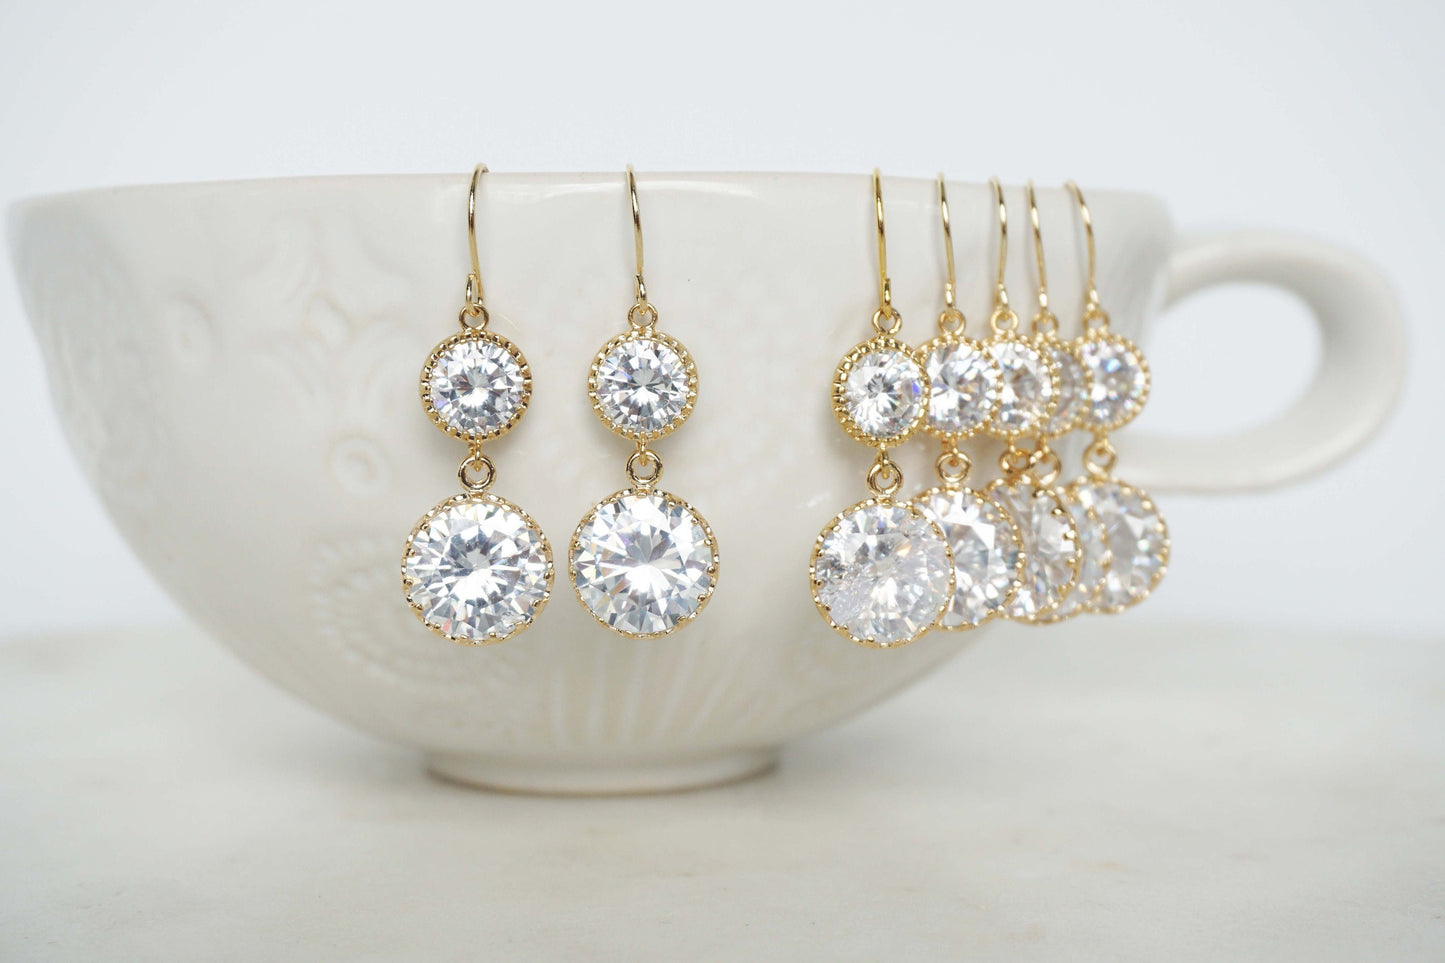 Crystal Gem and Gold Glam Double Drop Earrings | Bridesmaid Earrings | Wedding Jewelry | ECG26, ECS26